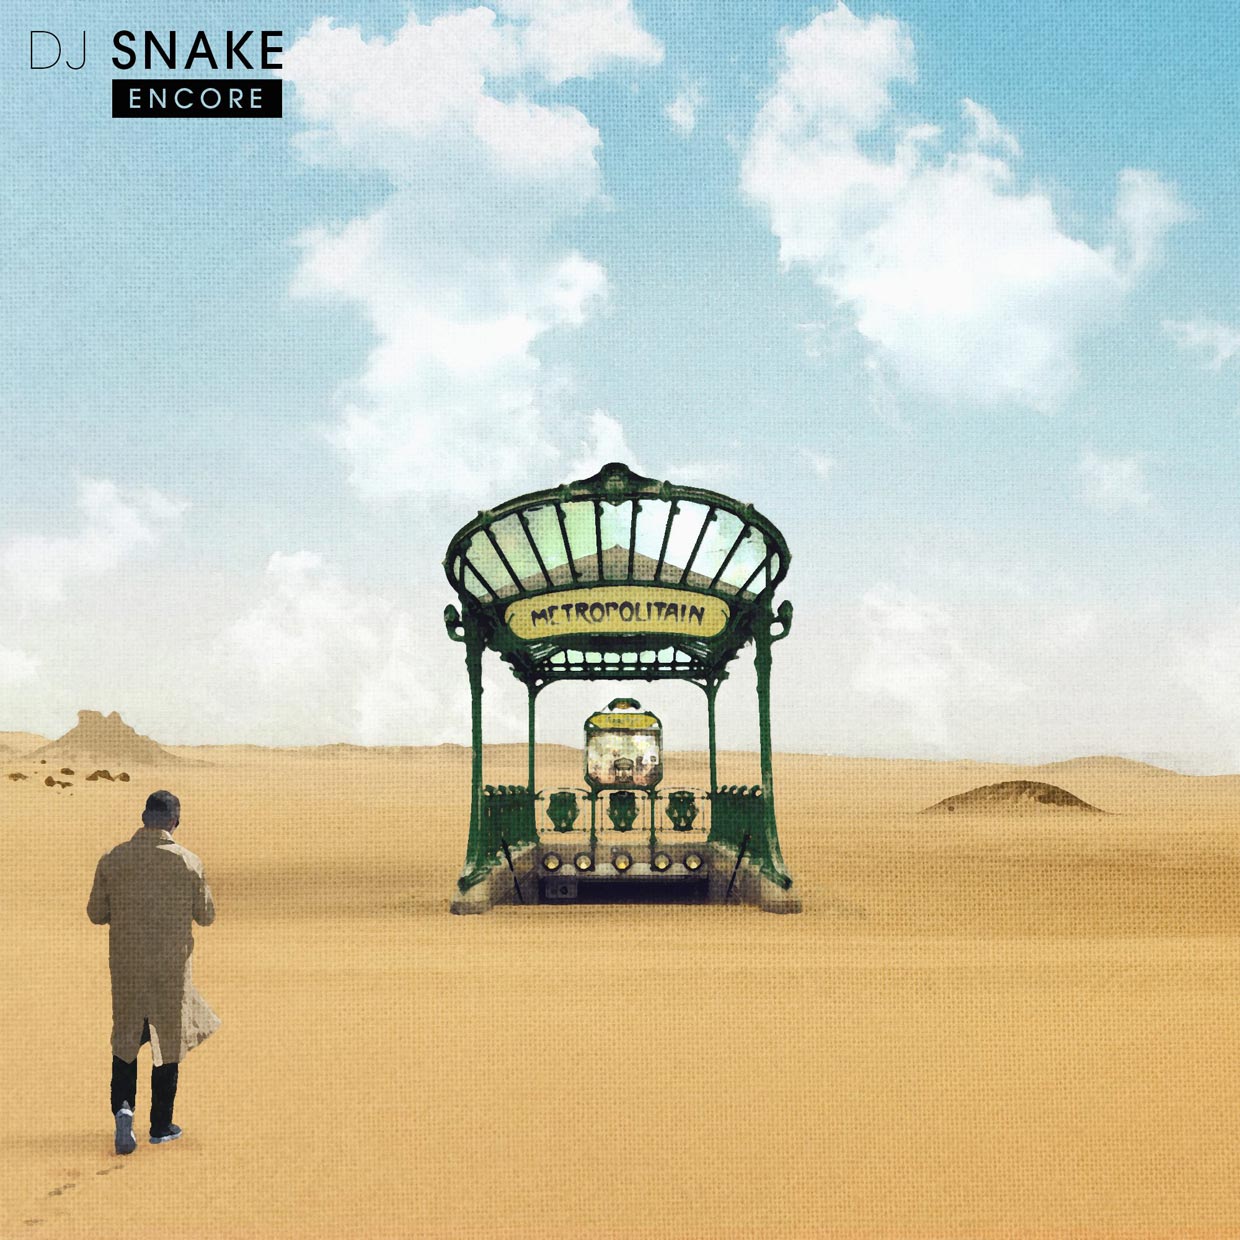 DJ Snake: Encore, la portada del disco